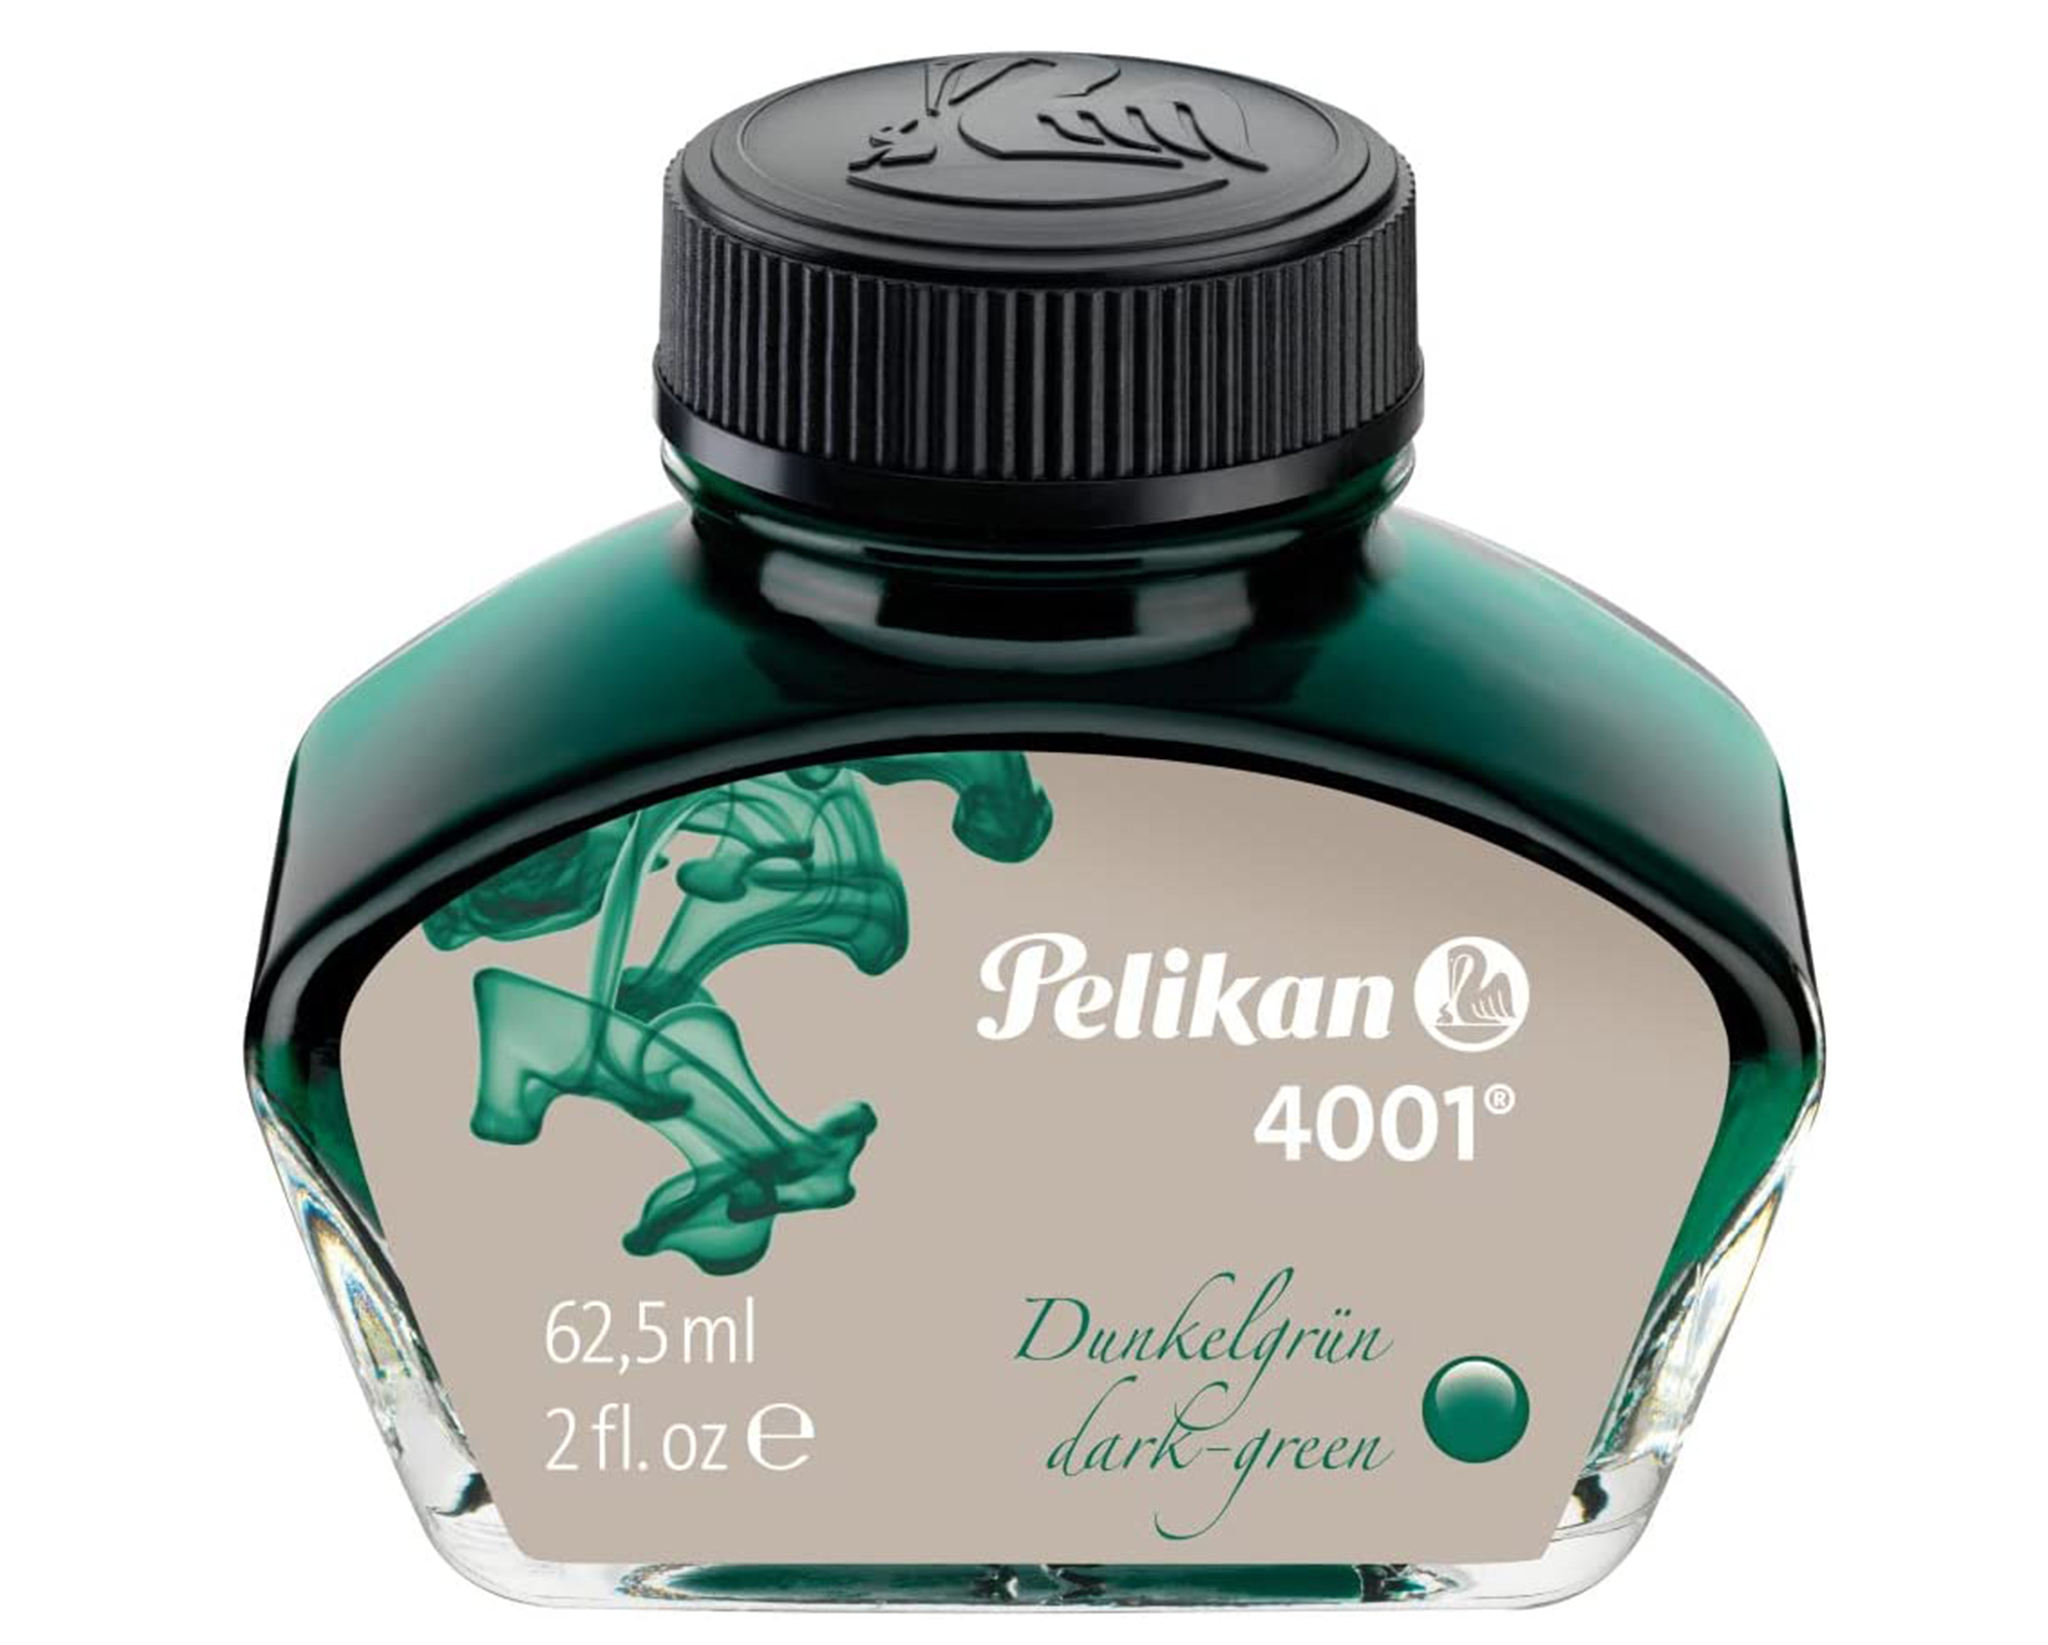 Pelikan 4001® Ink Dark Green, Glass 62.5ml